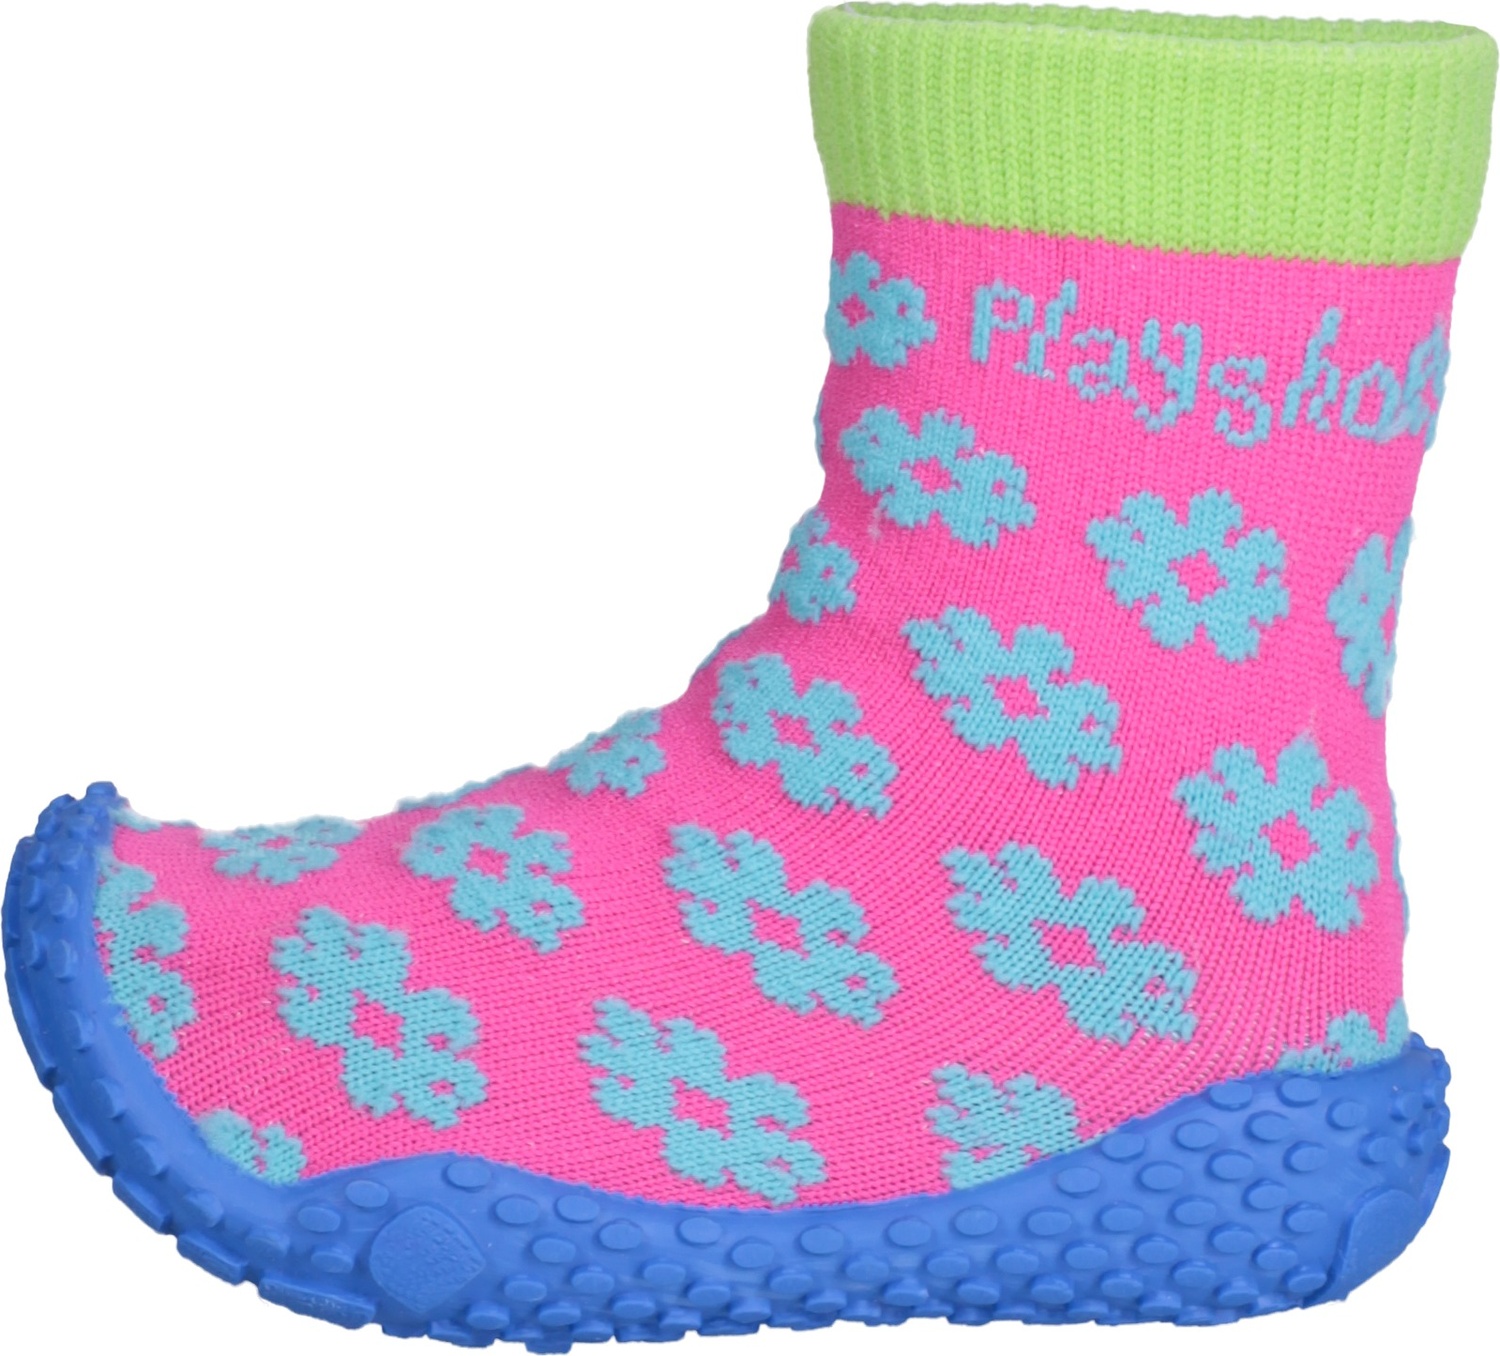 Playshoes Aqua-Socke Margerite Badeschuh Hausschuh 